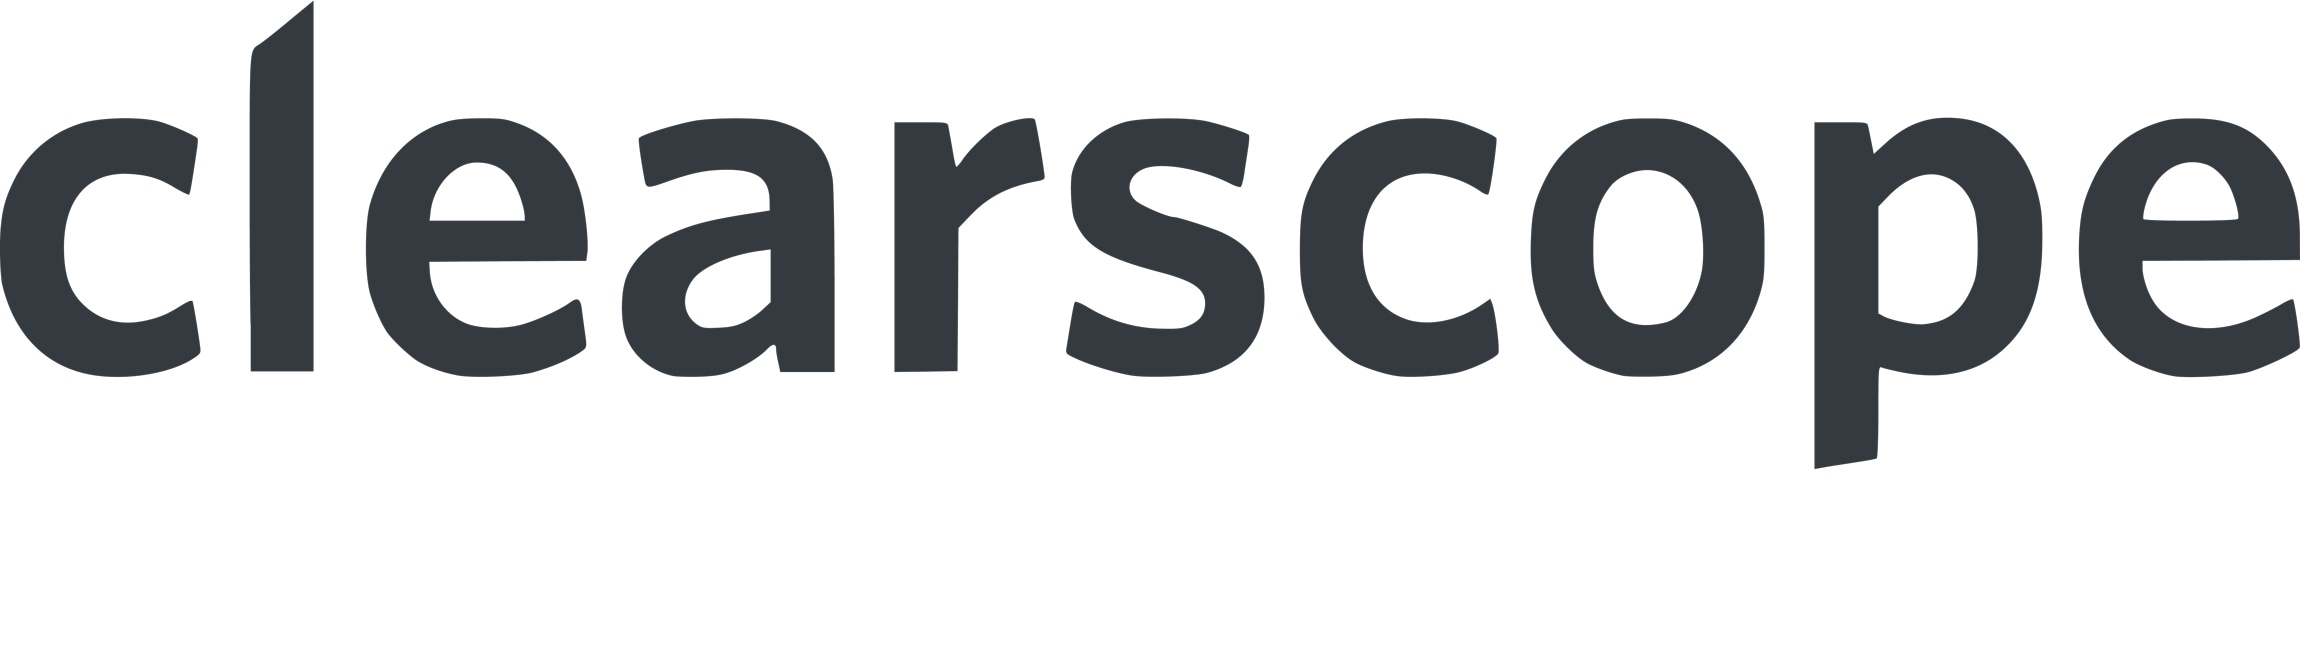 Logo Clearscope